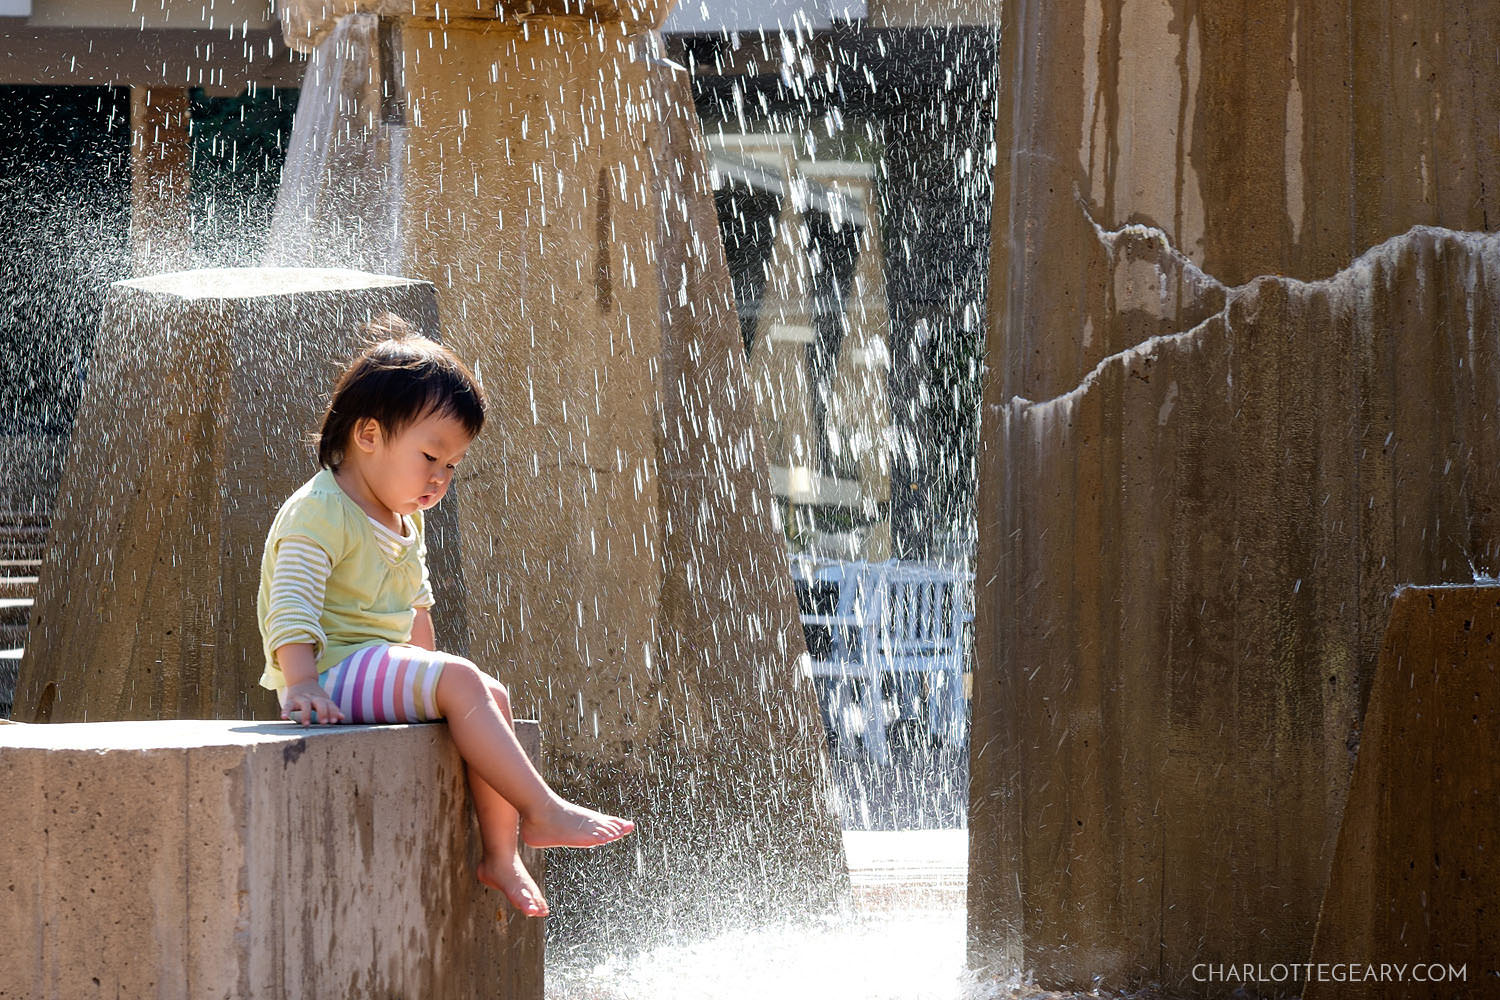 The children’s fountain at Lake Anne Plaza